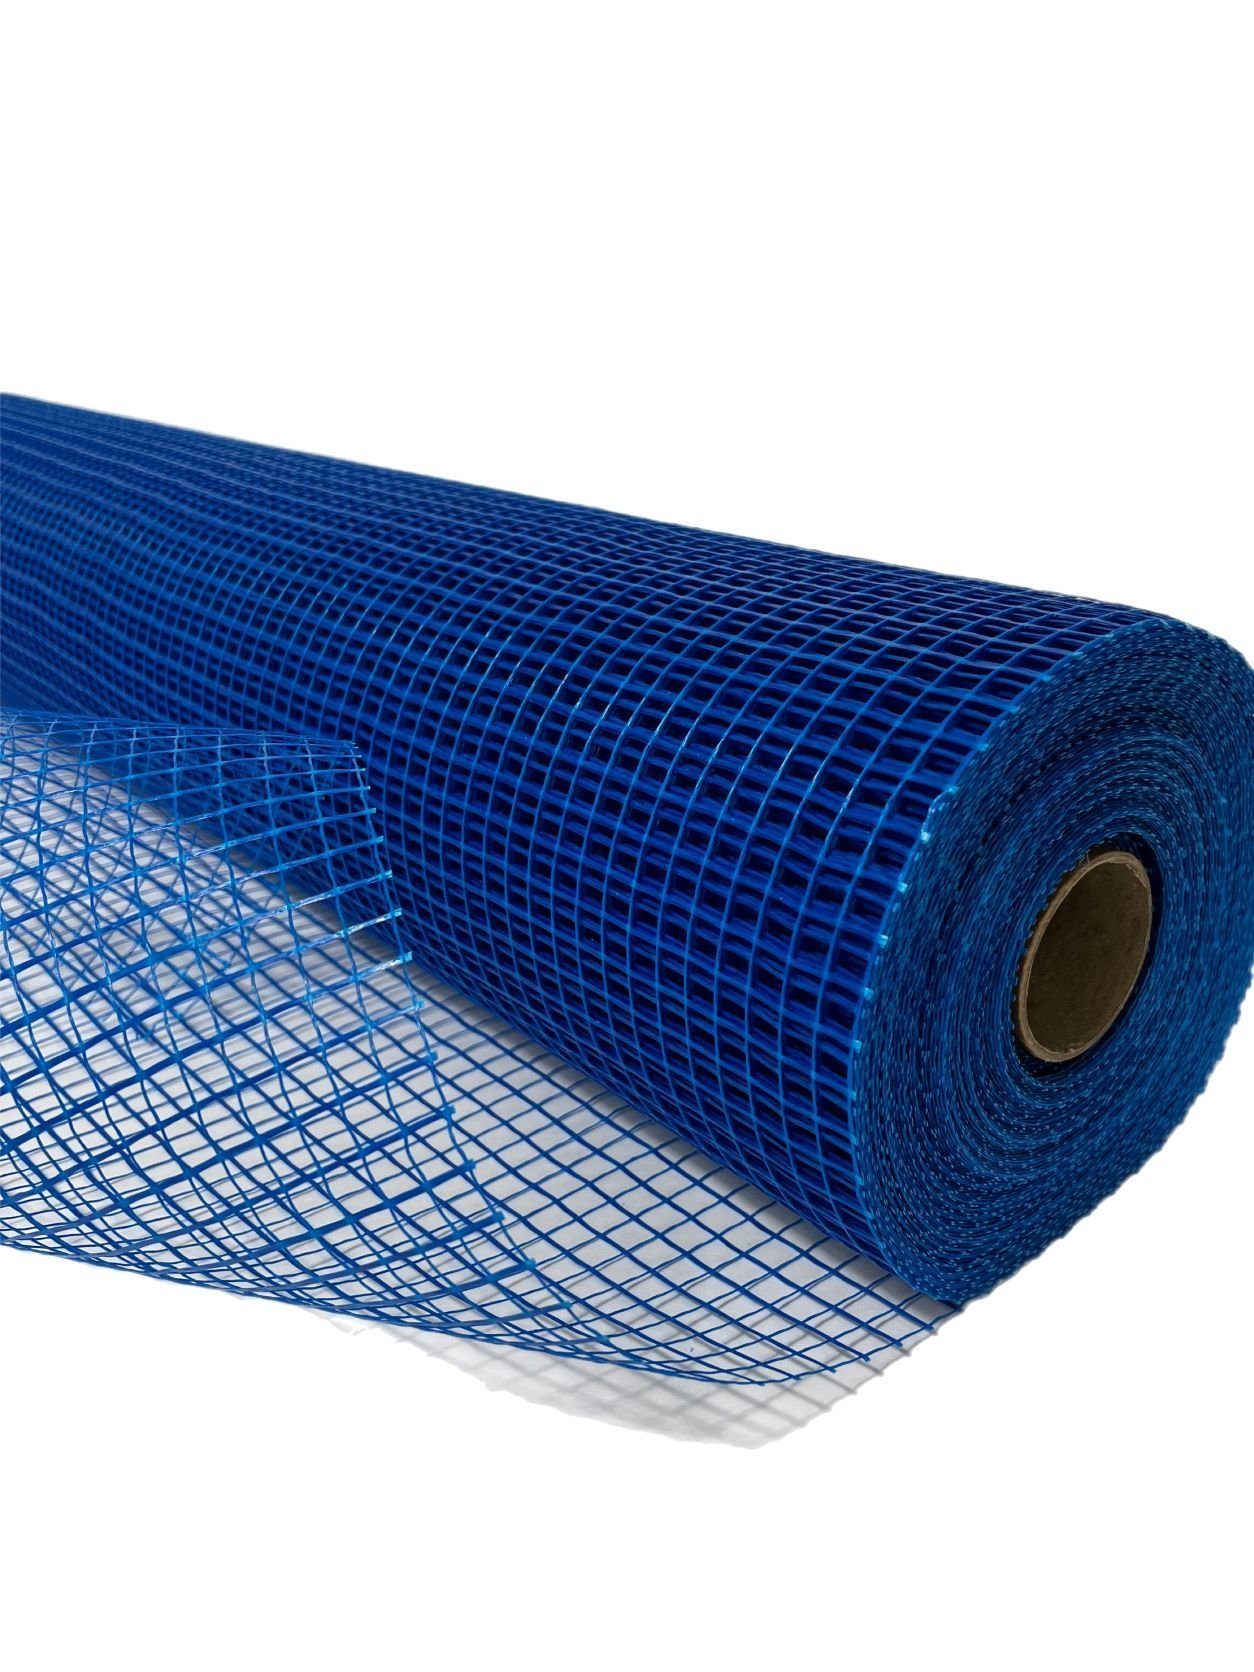 VaGo-Tools Glaswolle 110g/m² 500m² Putzgewebe Glasfasergewebe Blau